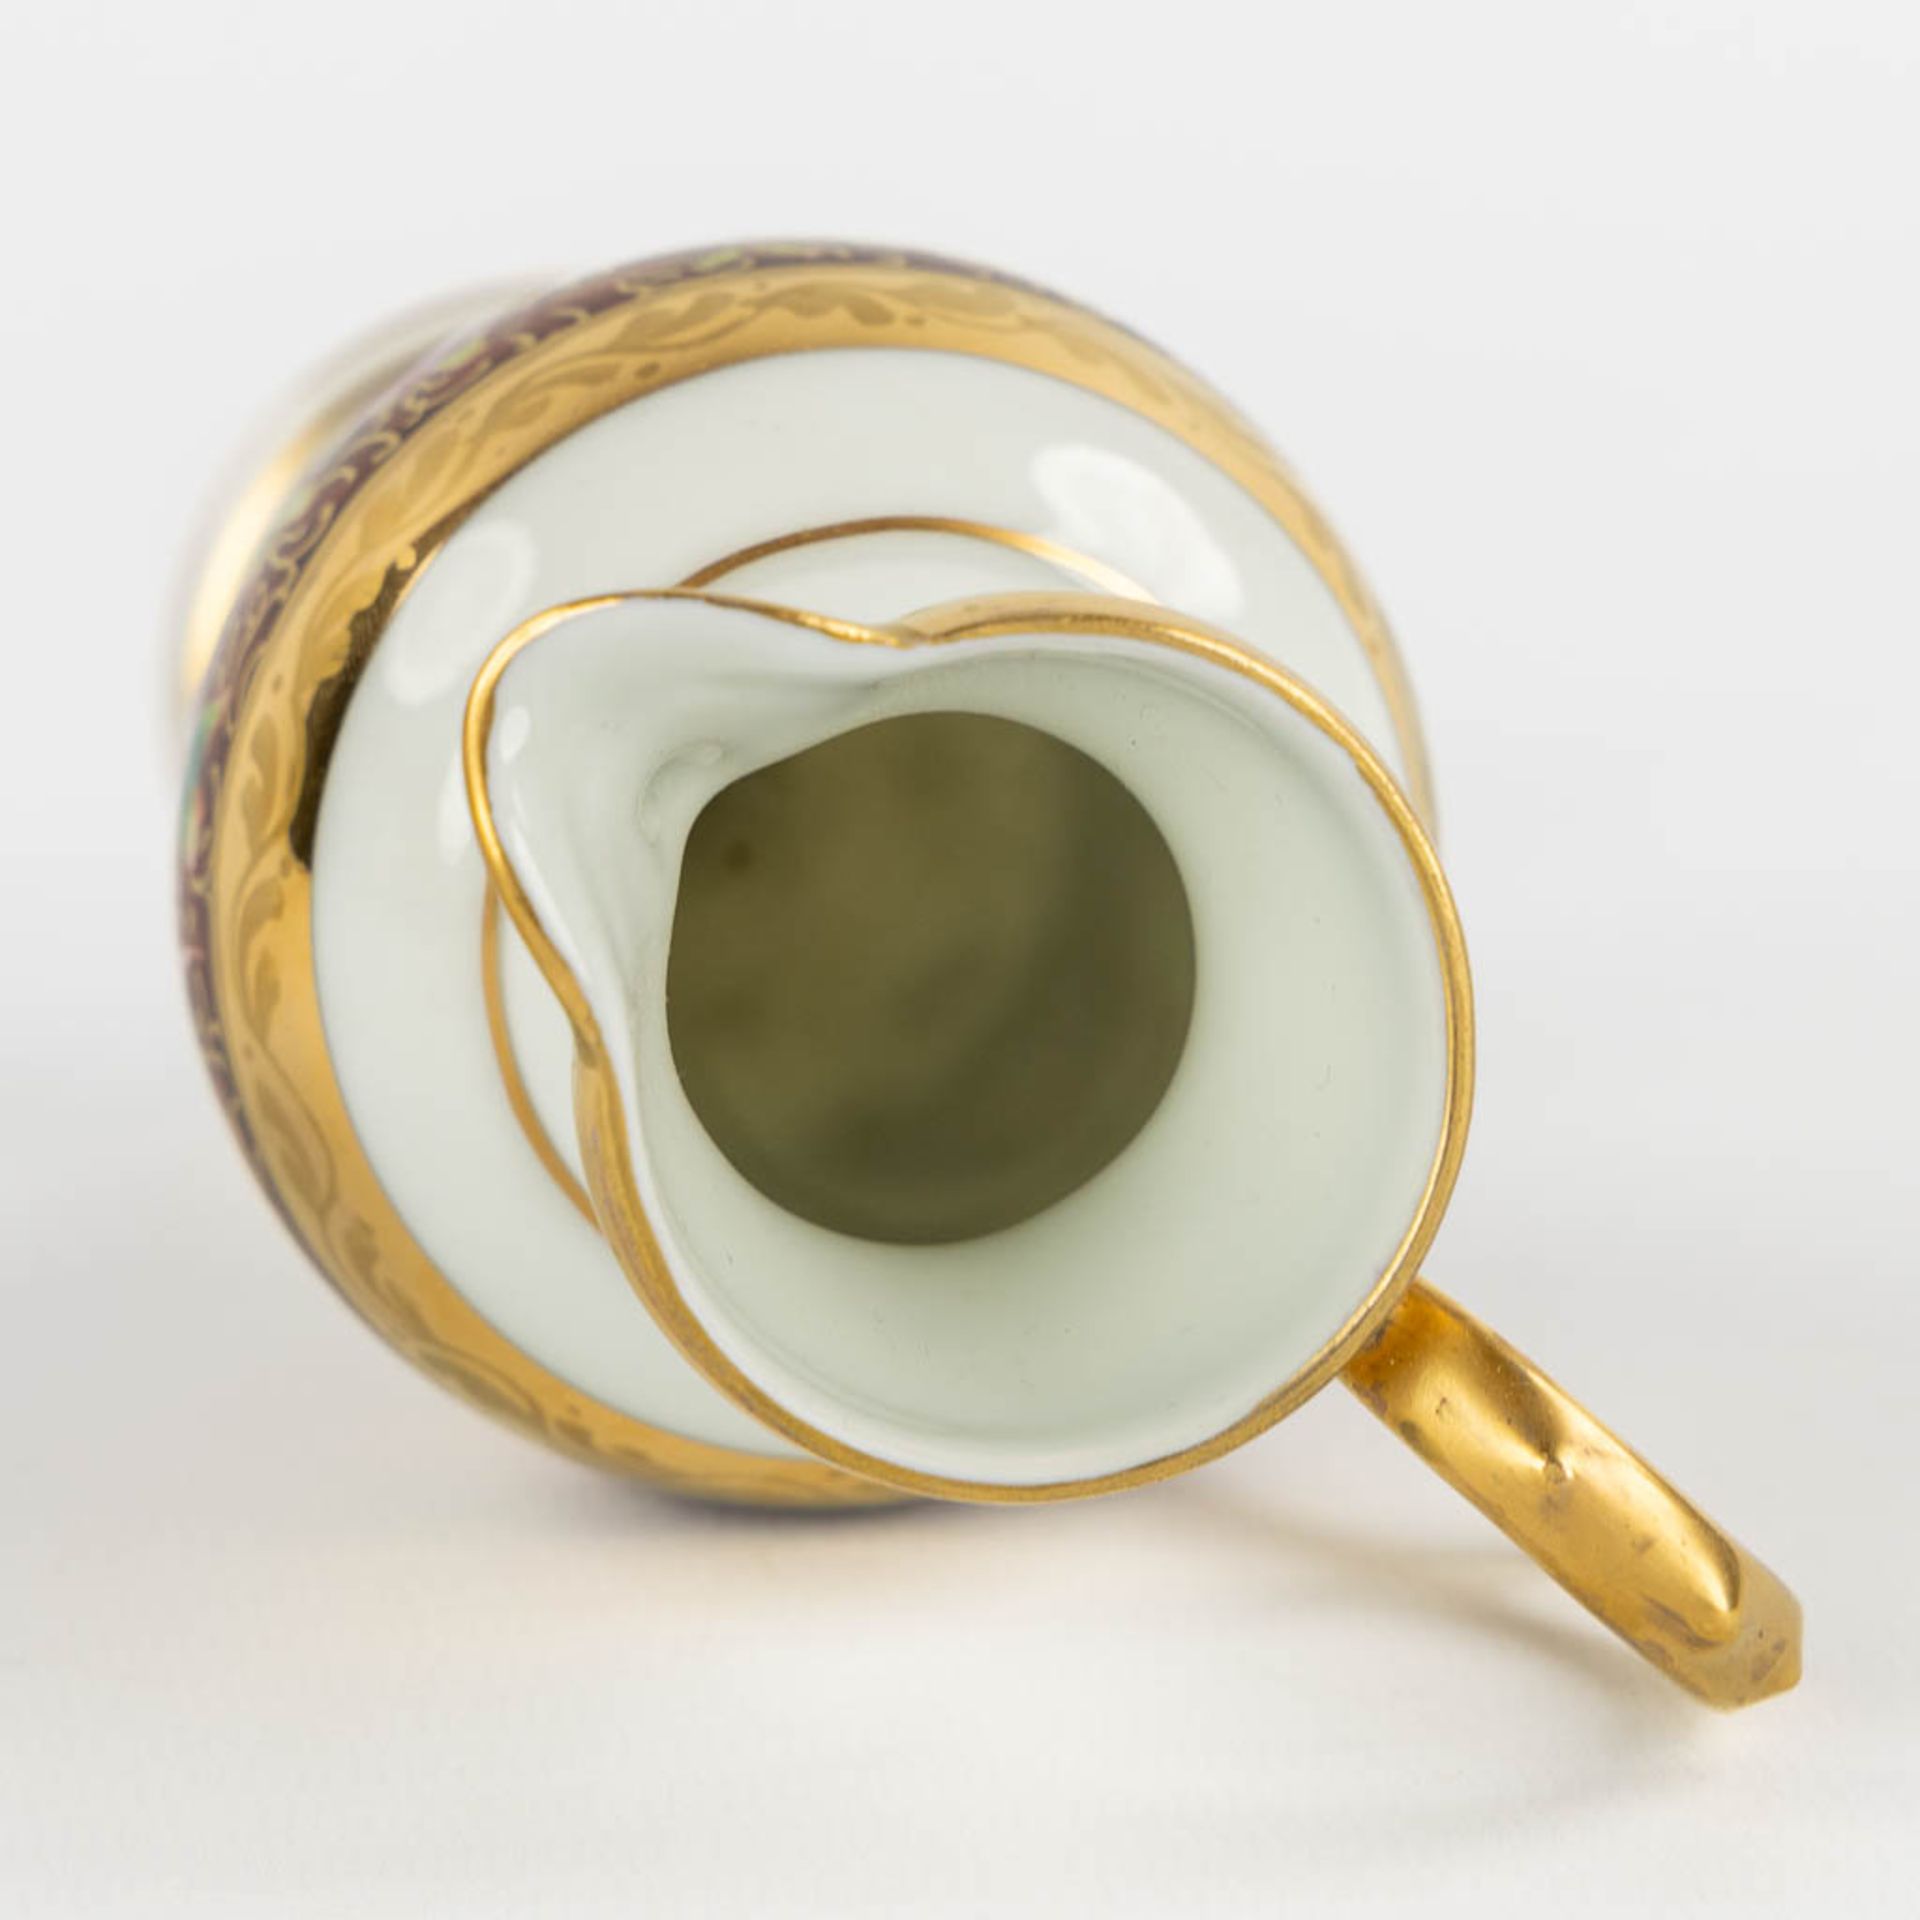 Giraud Limoges, a porcelain 'Tête à tête' coffee service. 20th C. (H:18 cm) - Image 18 of 18